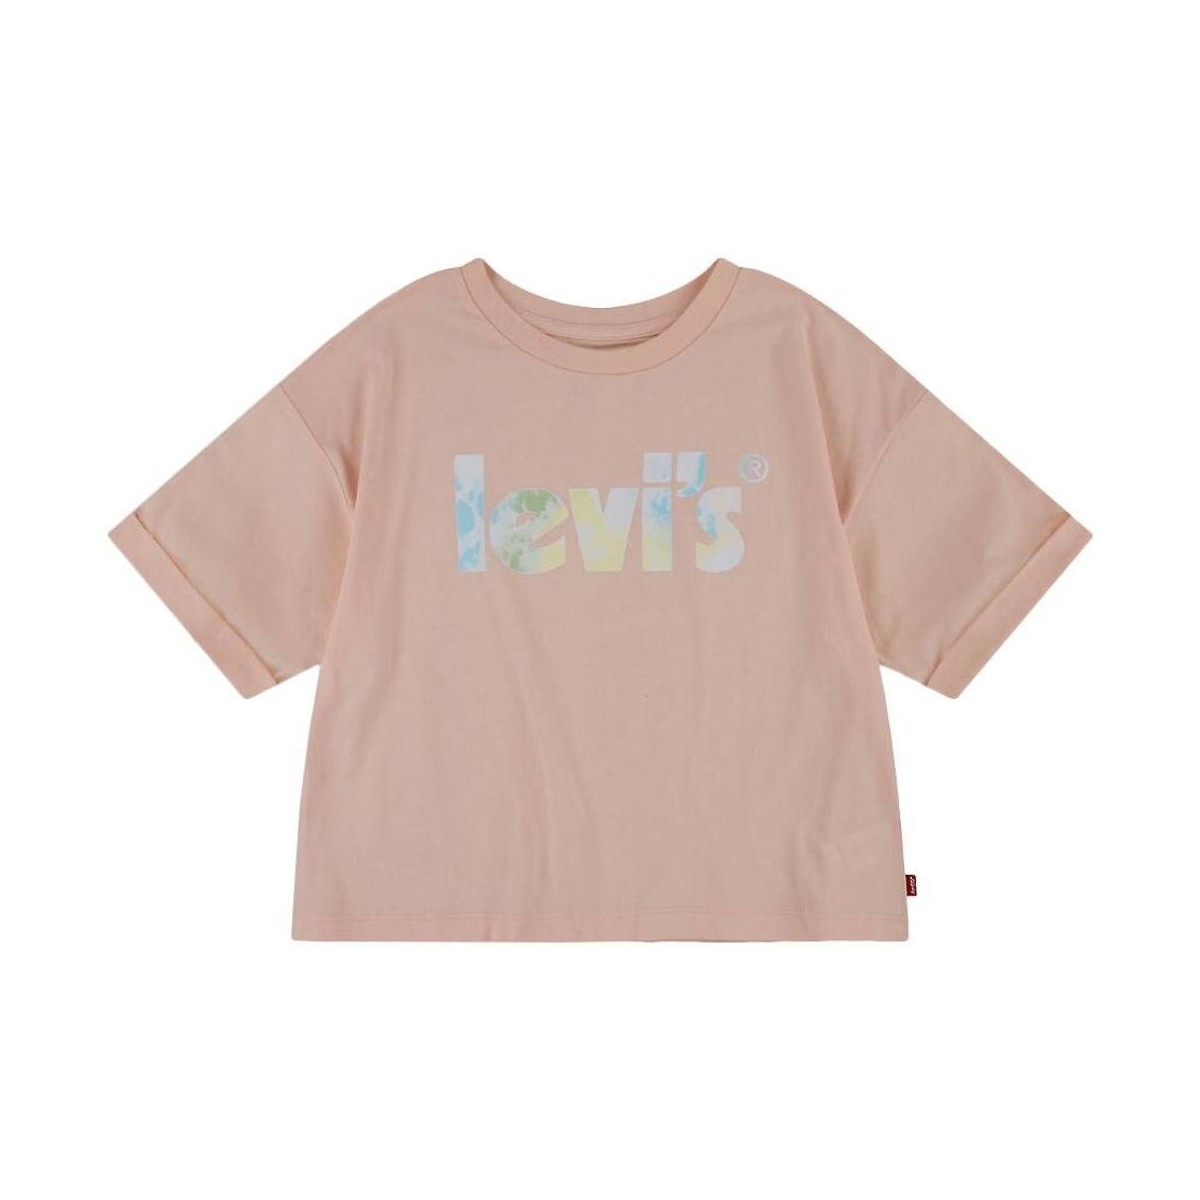 textil Niña Tops y Camisetas Levi's LVG MEET & GREET ROLLED SLEEVE Rosa